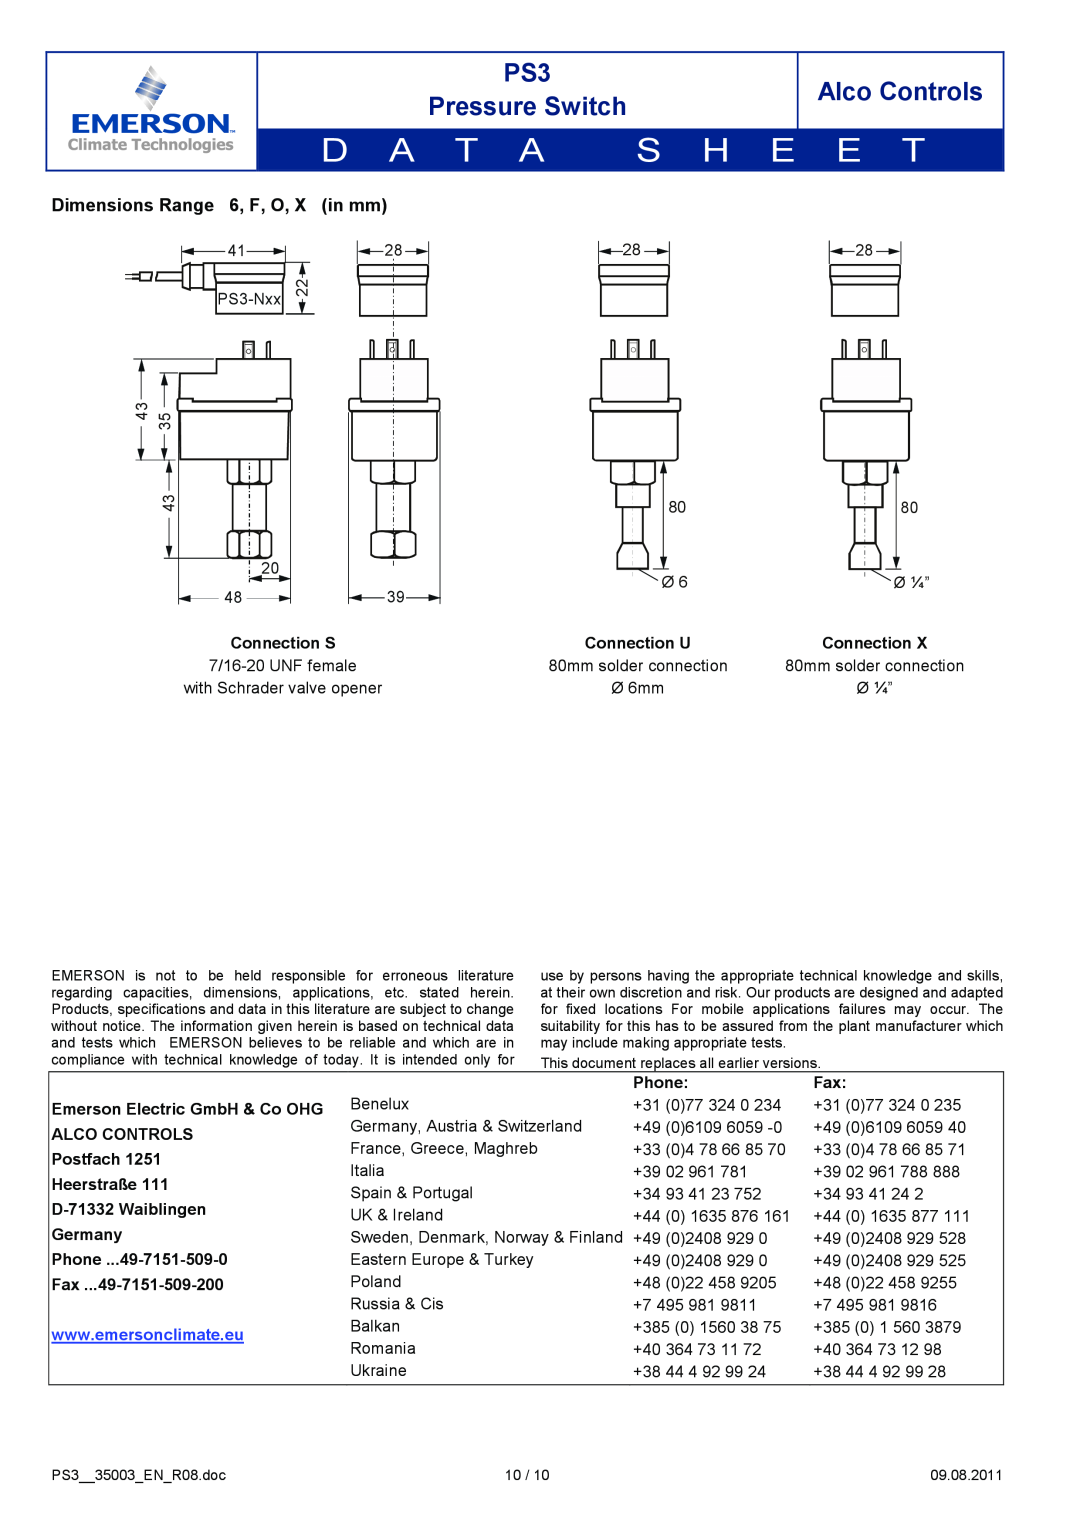 Emerson manual Dimensions Range 6, F, O, in mm, Alco Controls, Pressure Switch, PS3-Nxx, Ø ¼” 